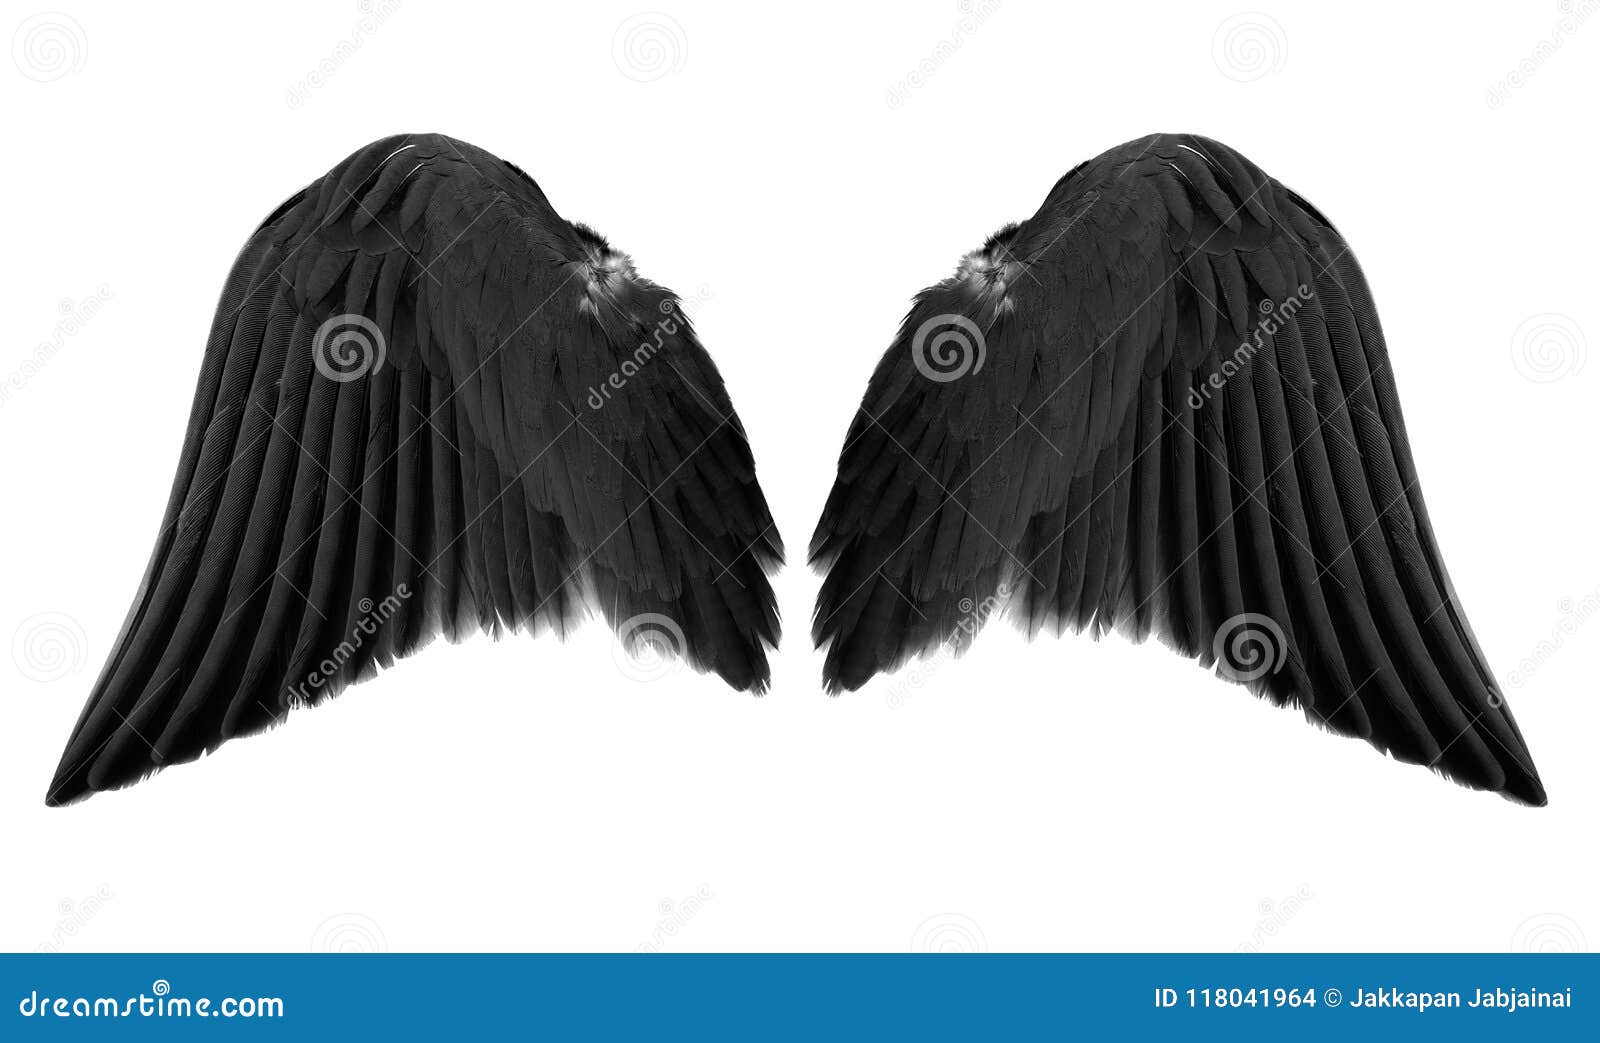 Schwarze Engelsflügel stockbild. Bild von vogel, flug - 115979465